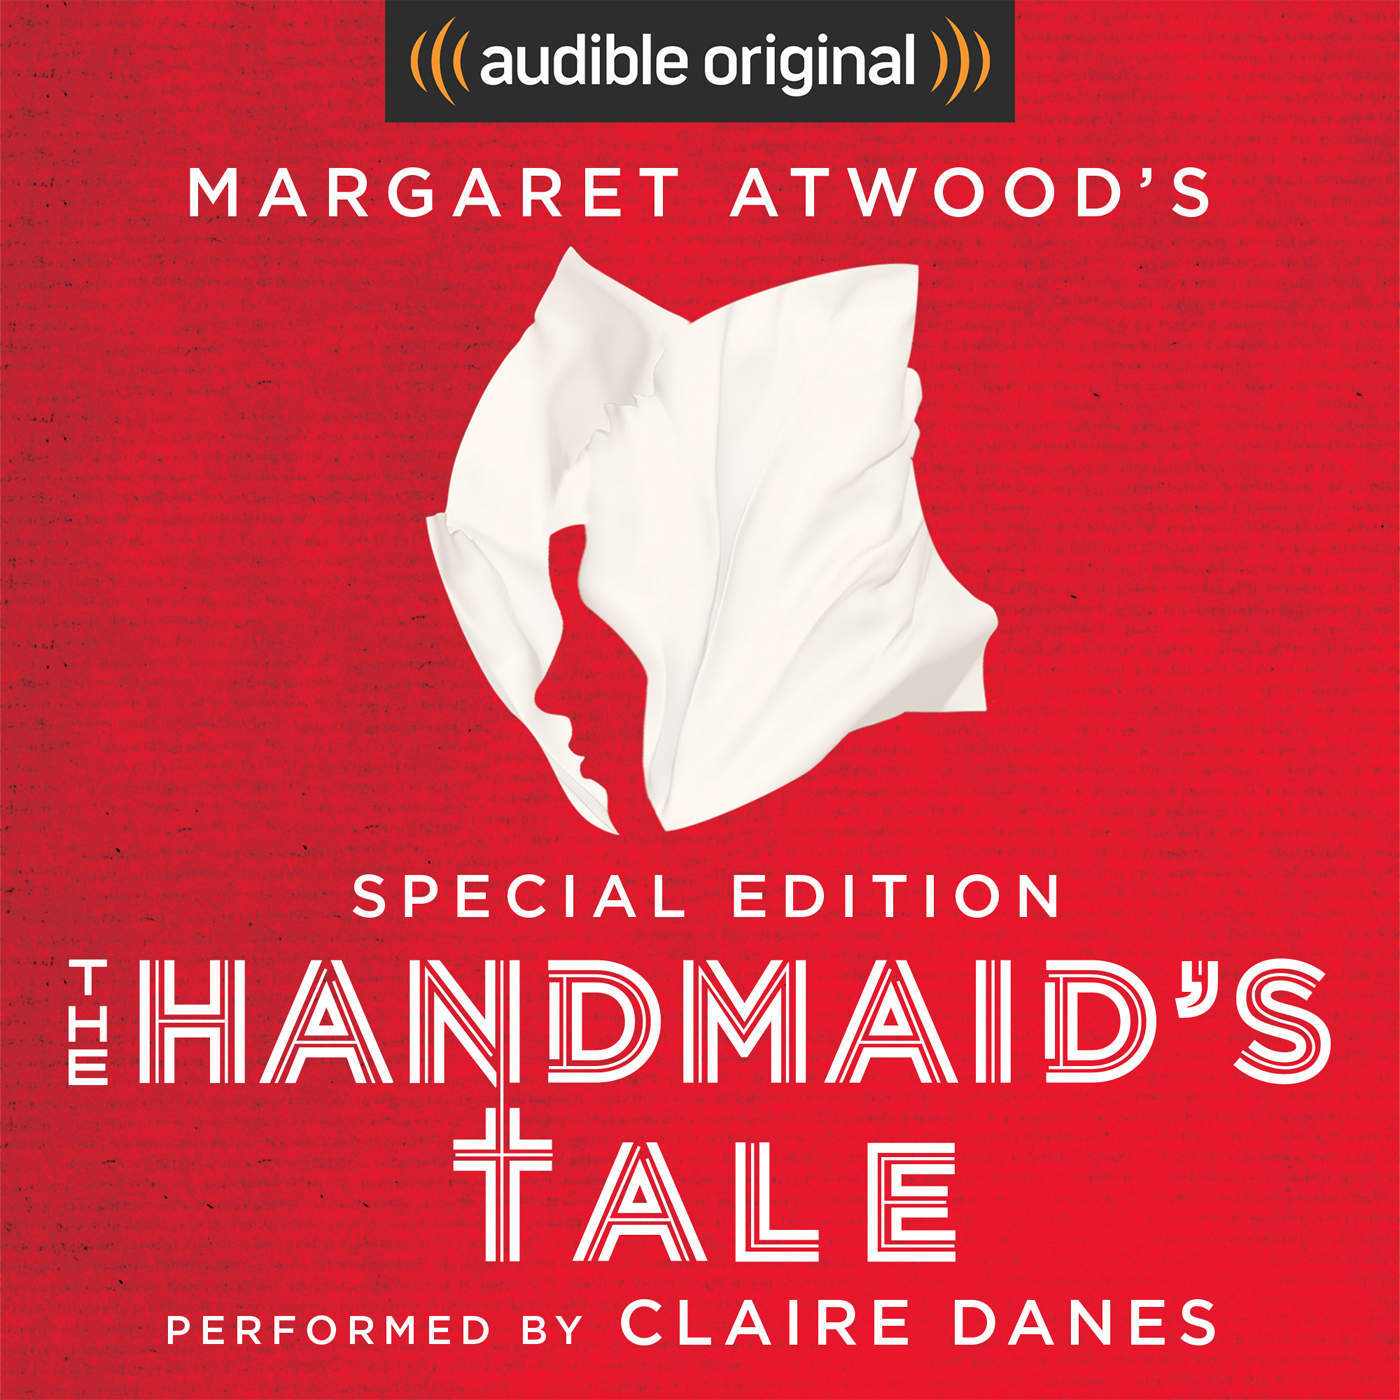 the handmaid